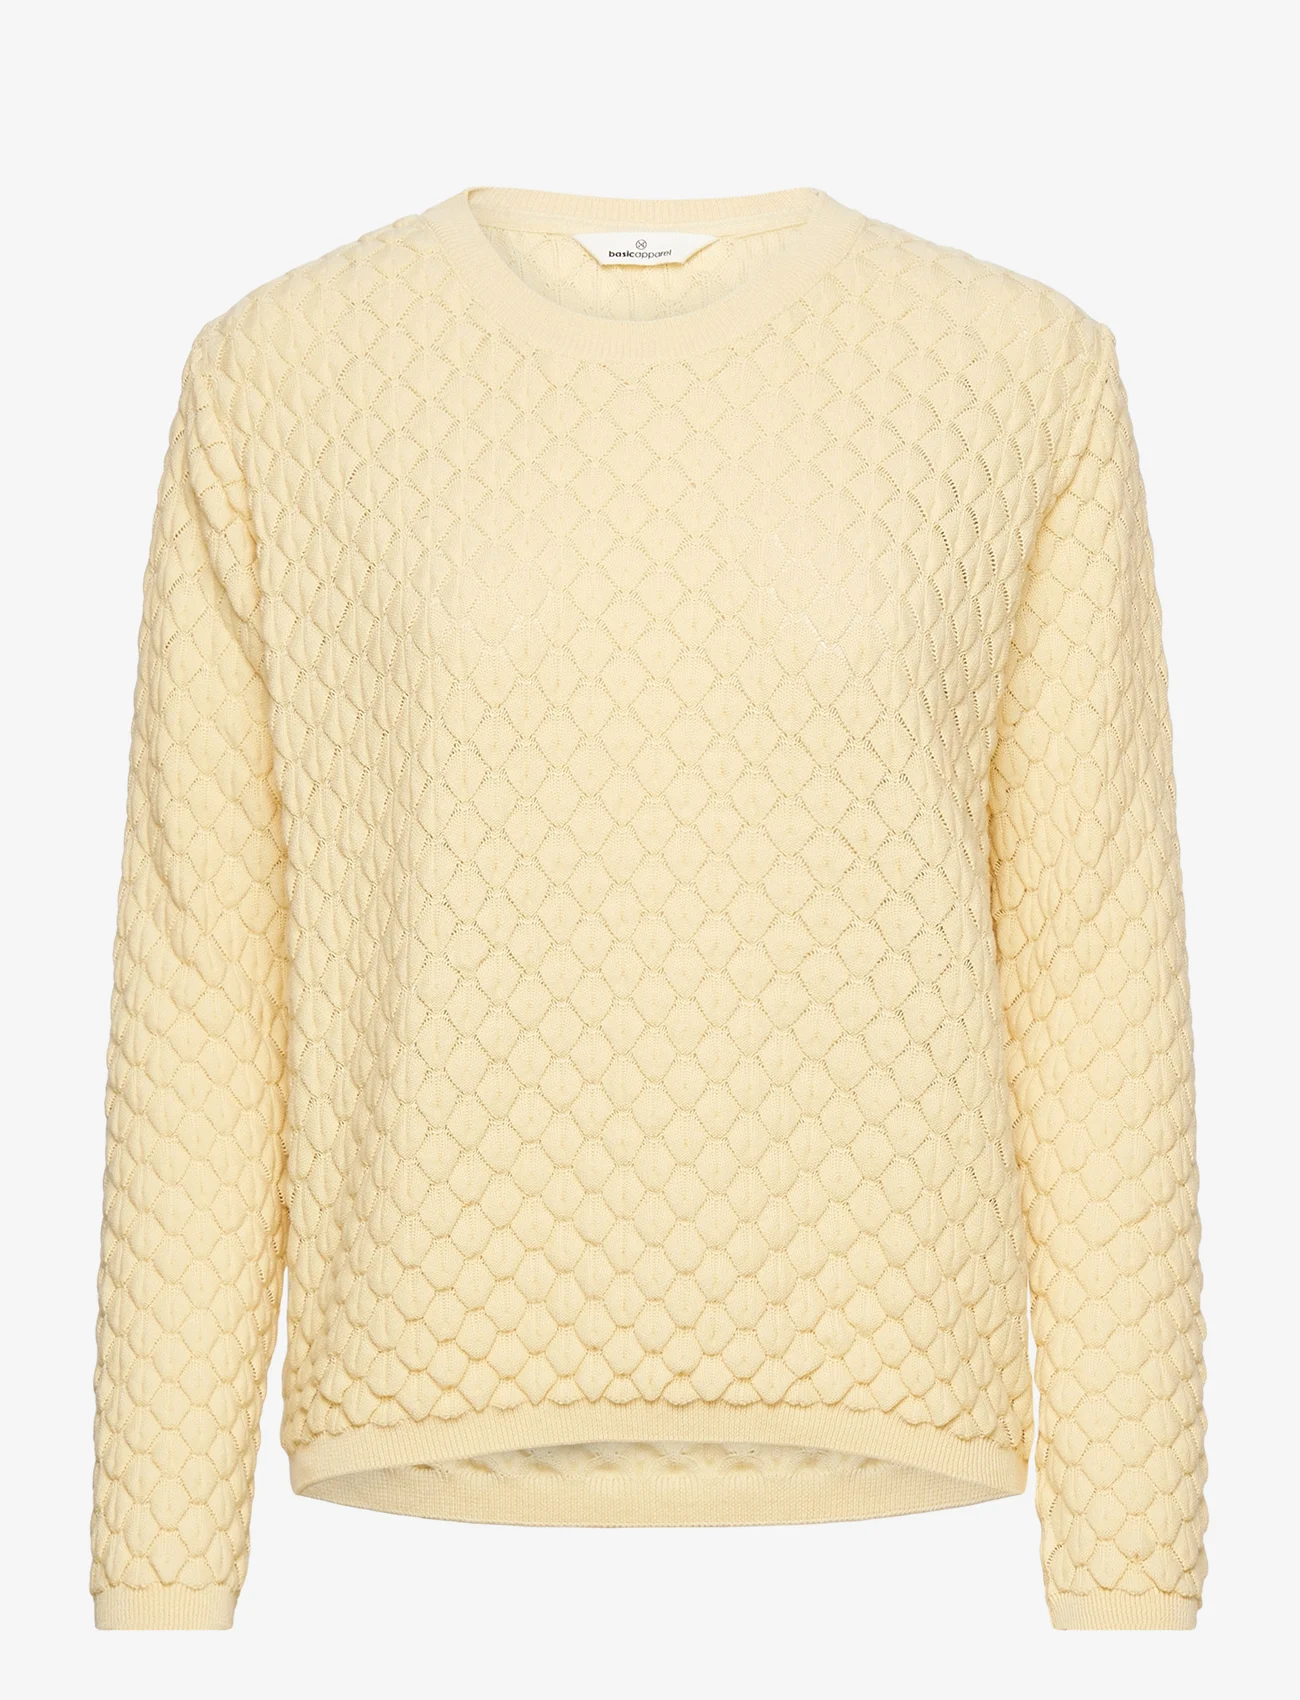 Basic Apparel - Camilla Sweater - megzti drabužiai - straw - 0